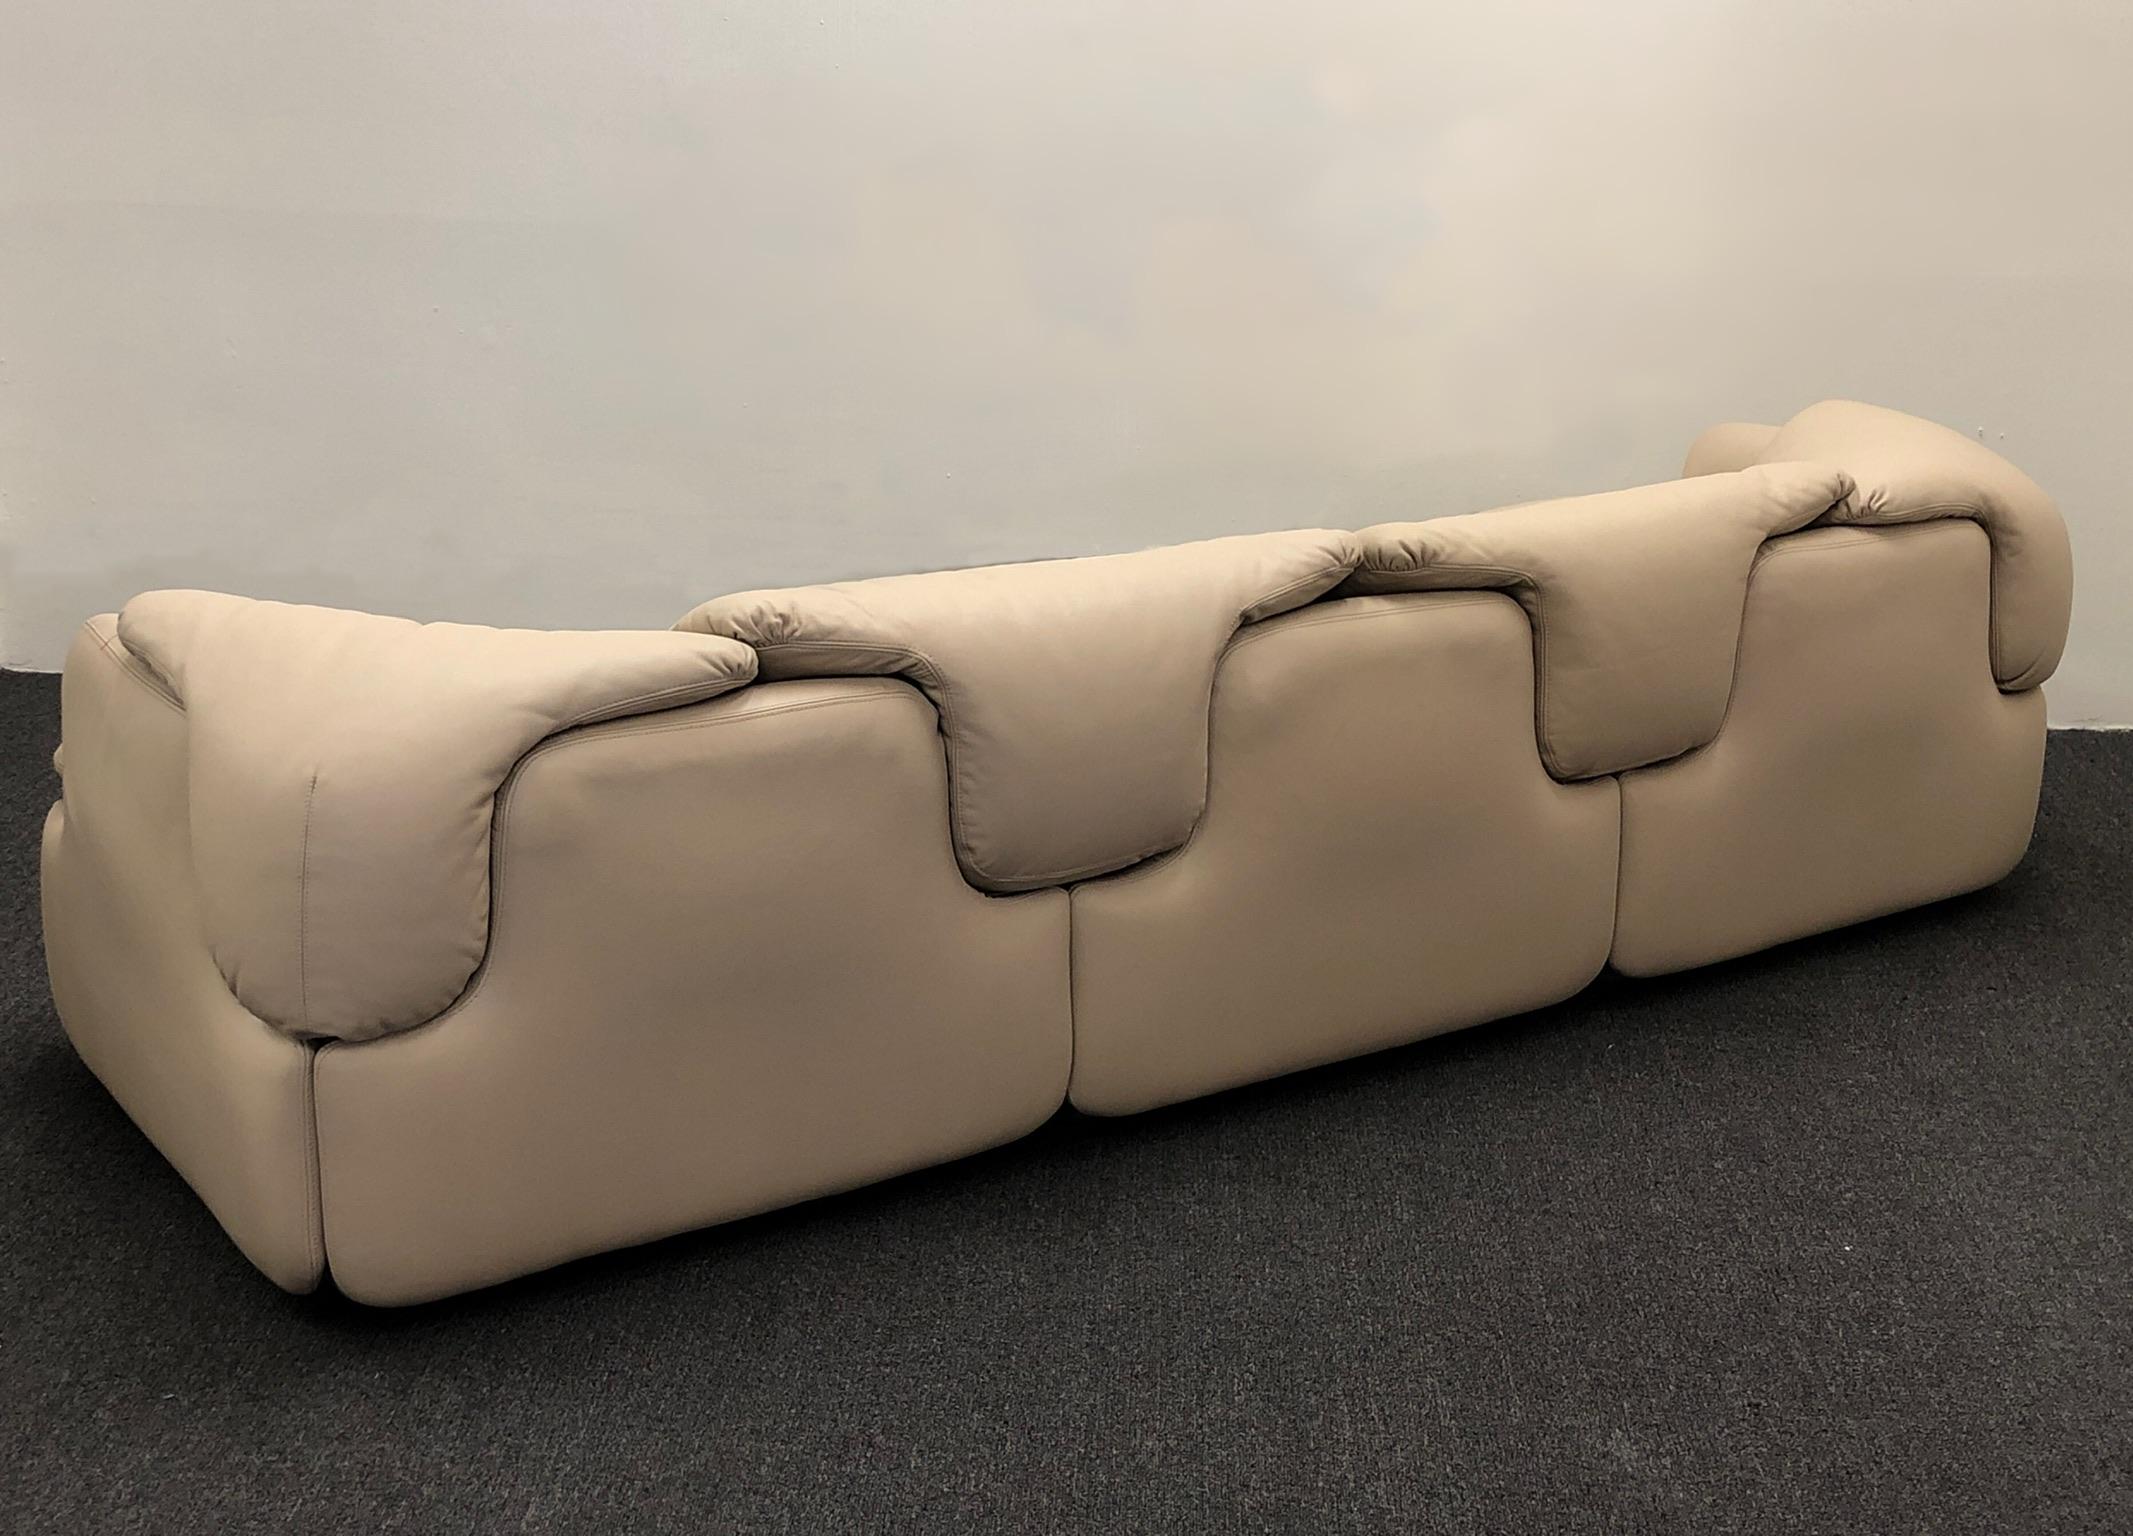 Late 20th Century Italian Off White Leather Sofa by Alberto Rosselli for Saporiti